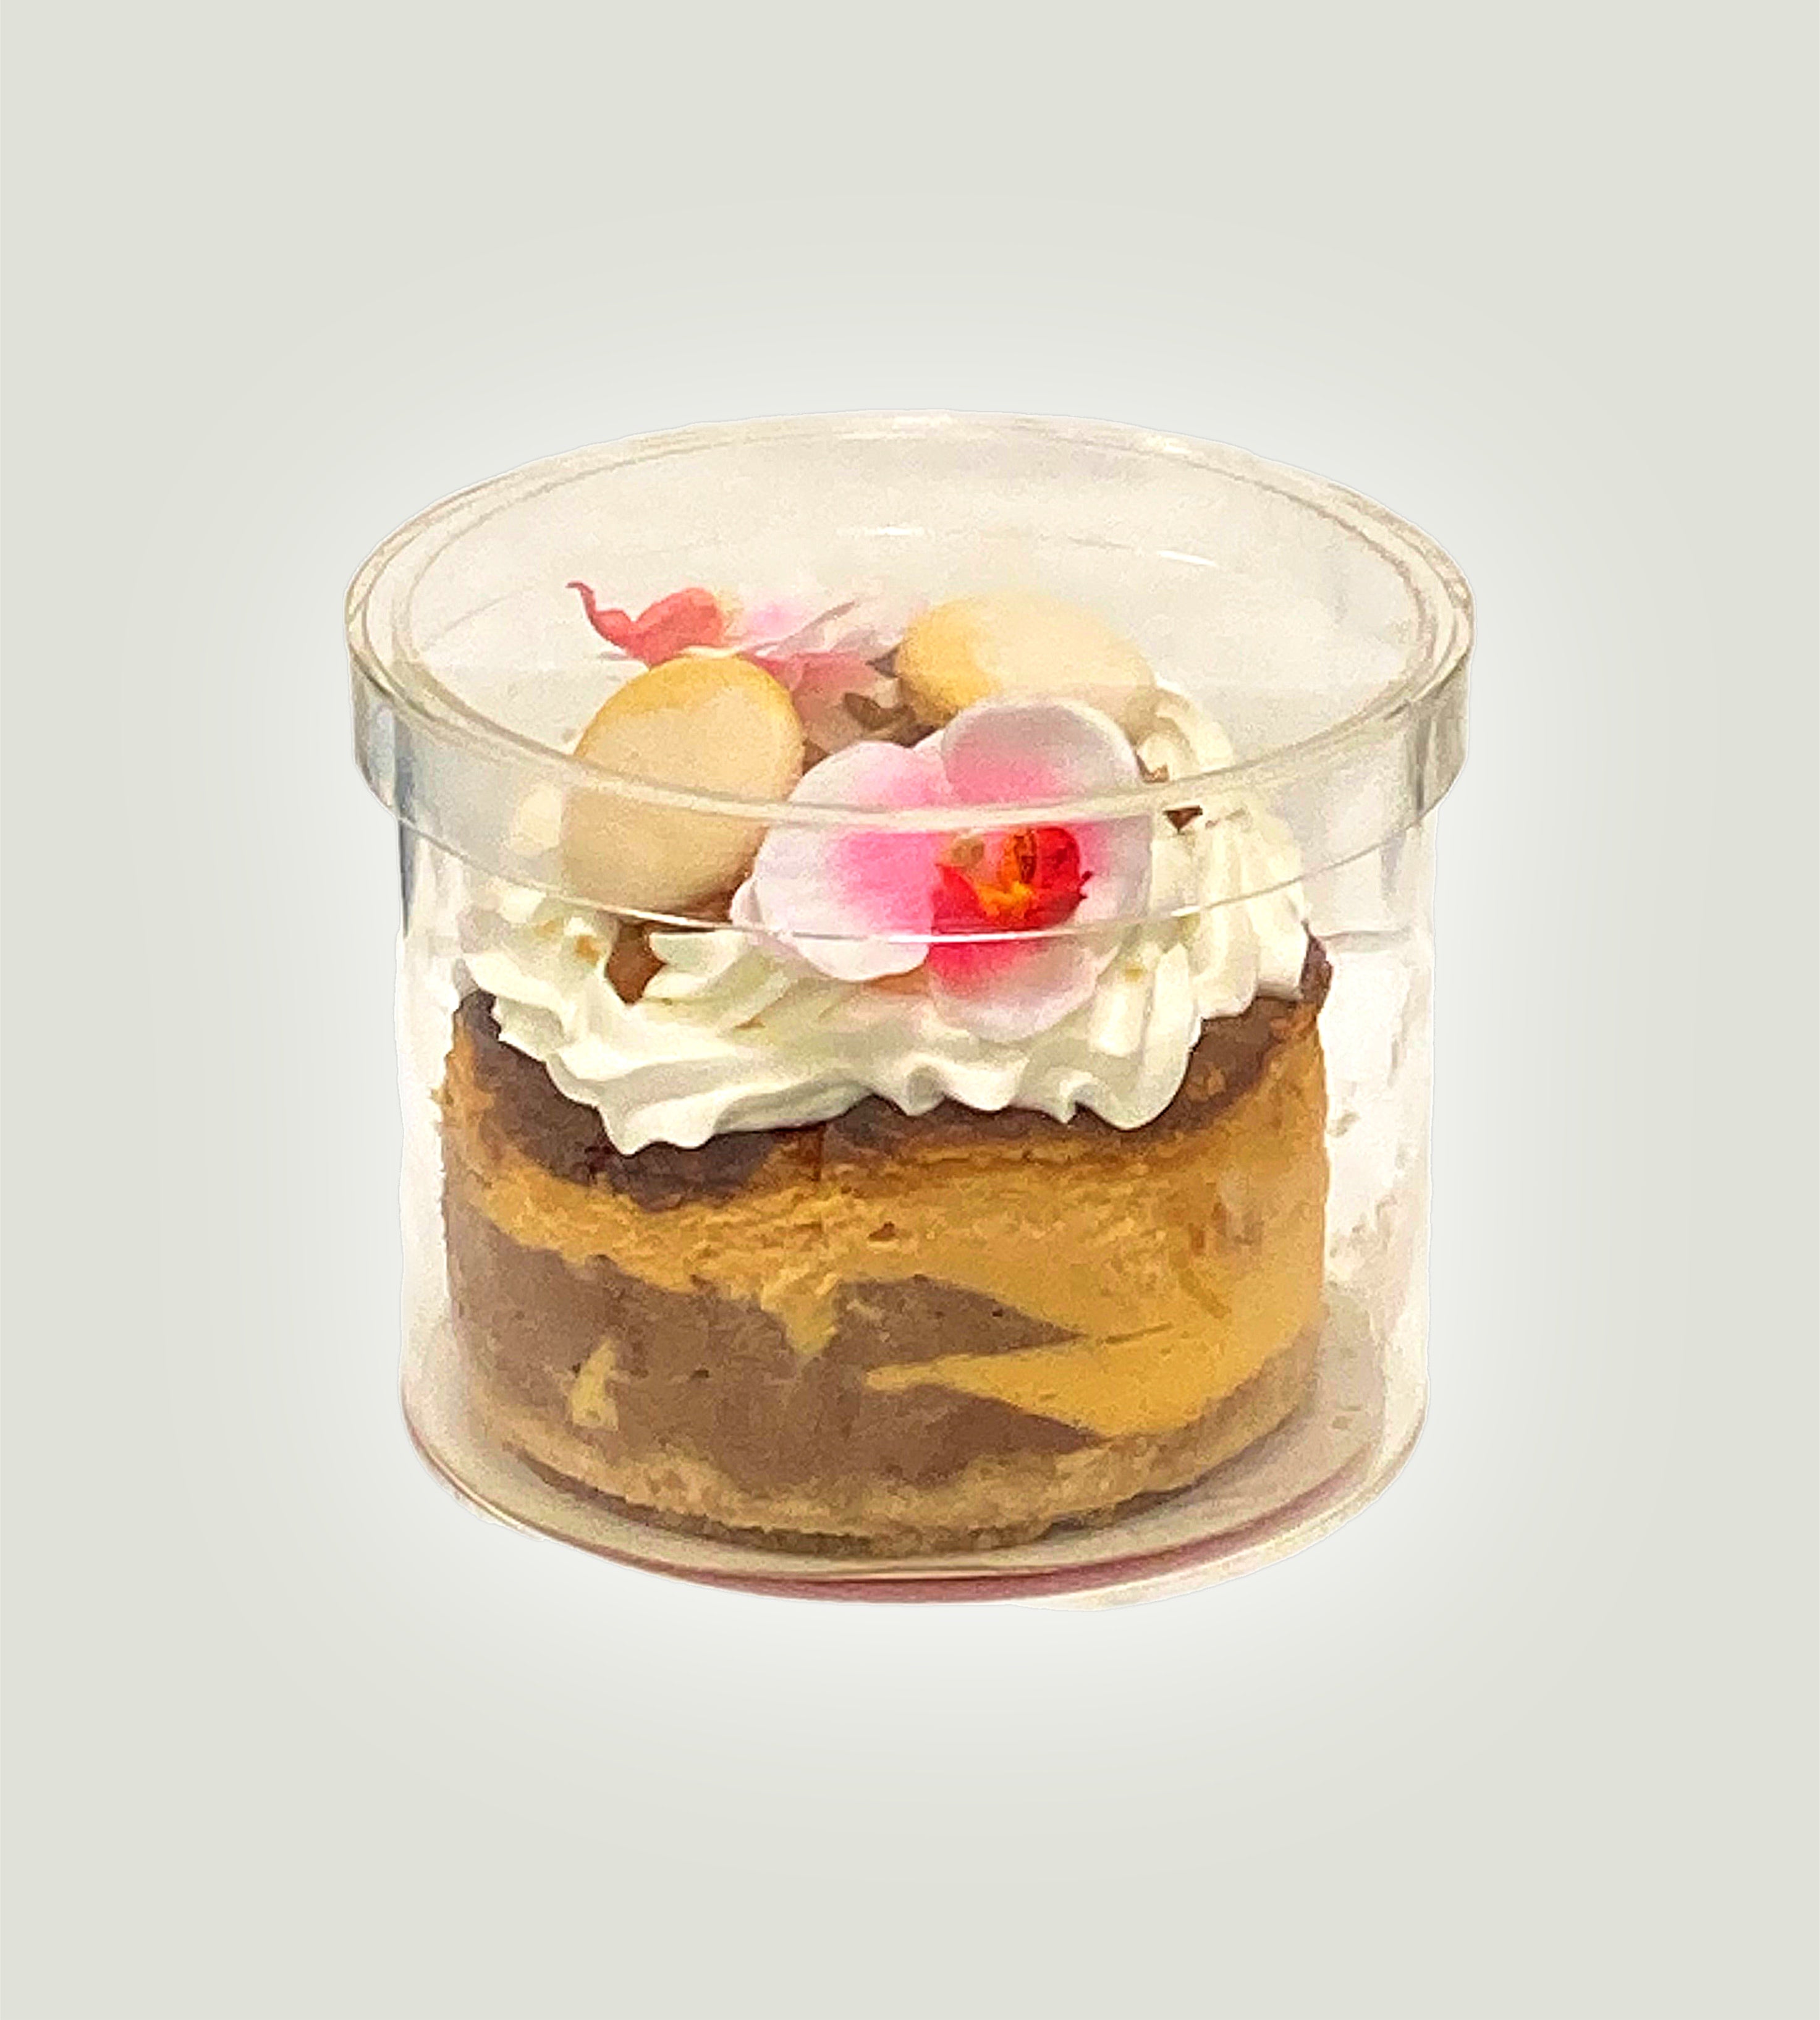 Cheesecake in Acrylic 7”